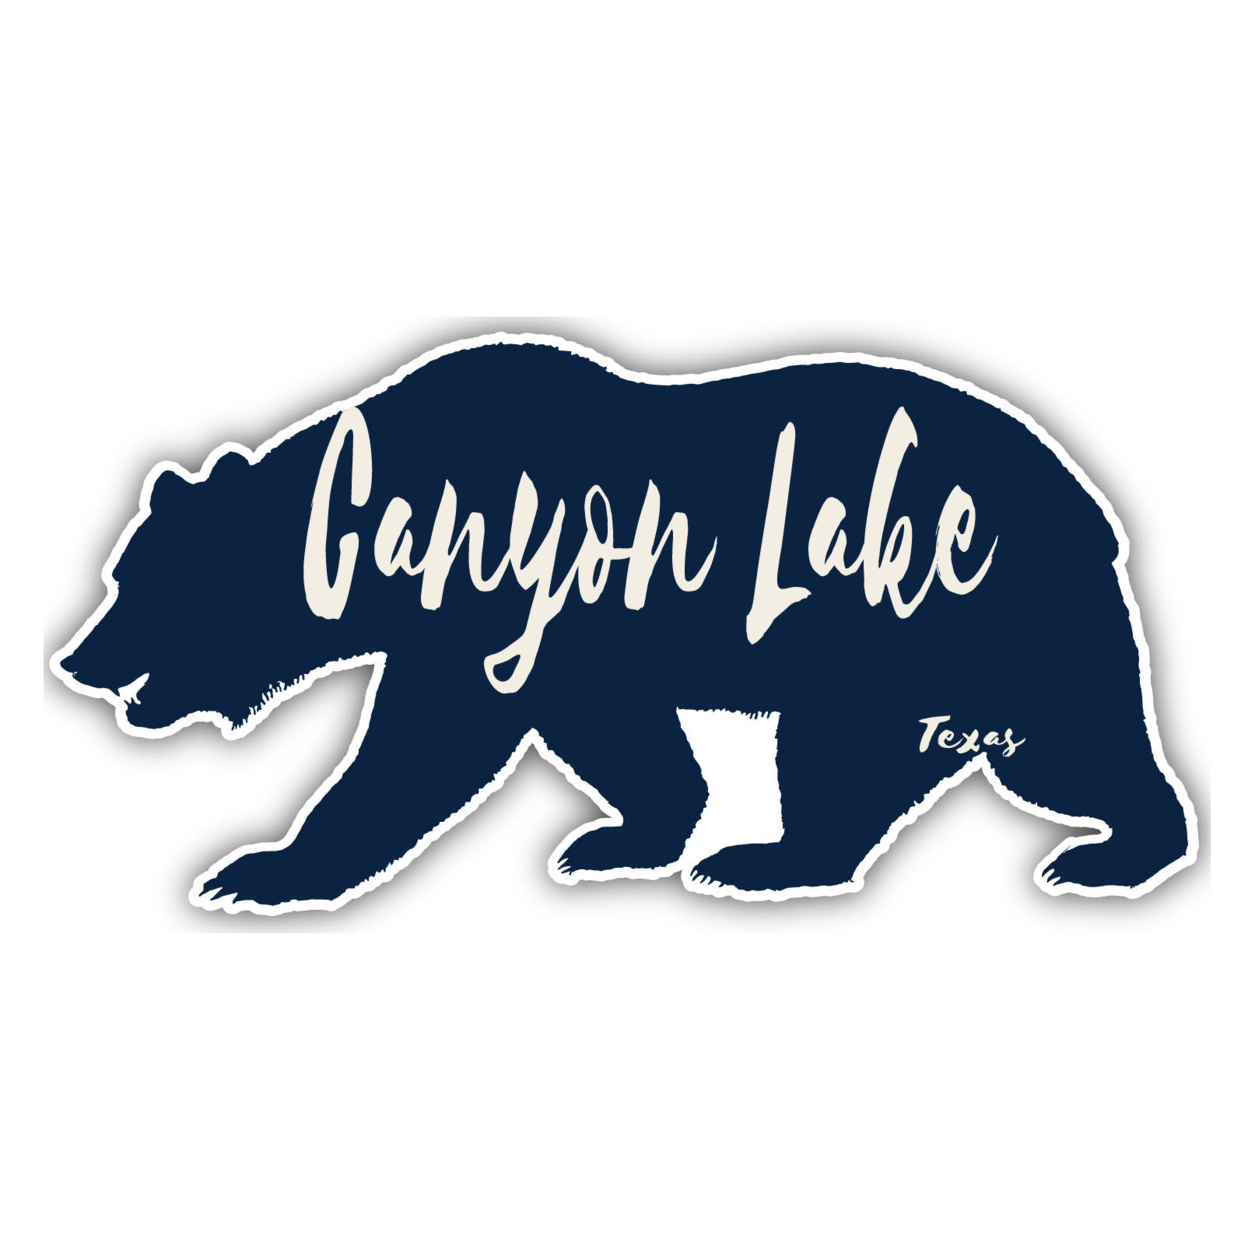 Canyon Lake Texas Souvenir Decorative Stickers (Choose Theme And Size) - 4-Pack, 12-Inch, Bear